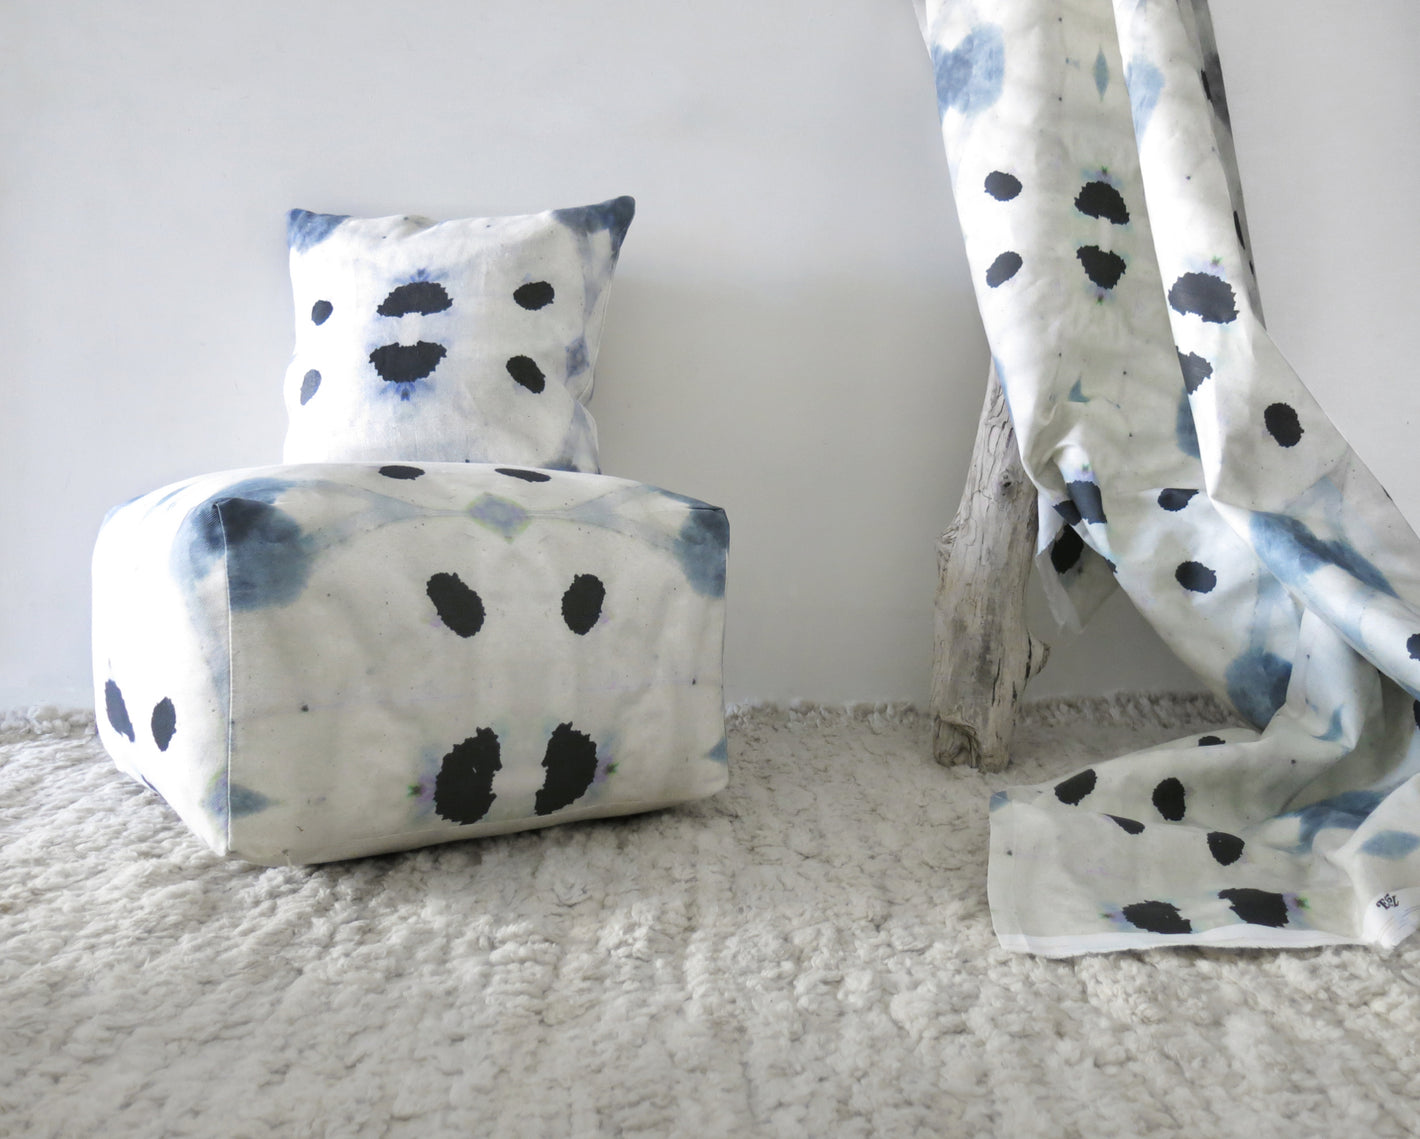 A white polka dot pillow on a rug